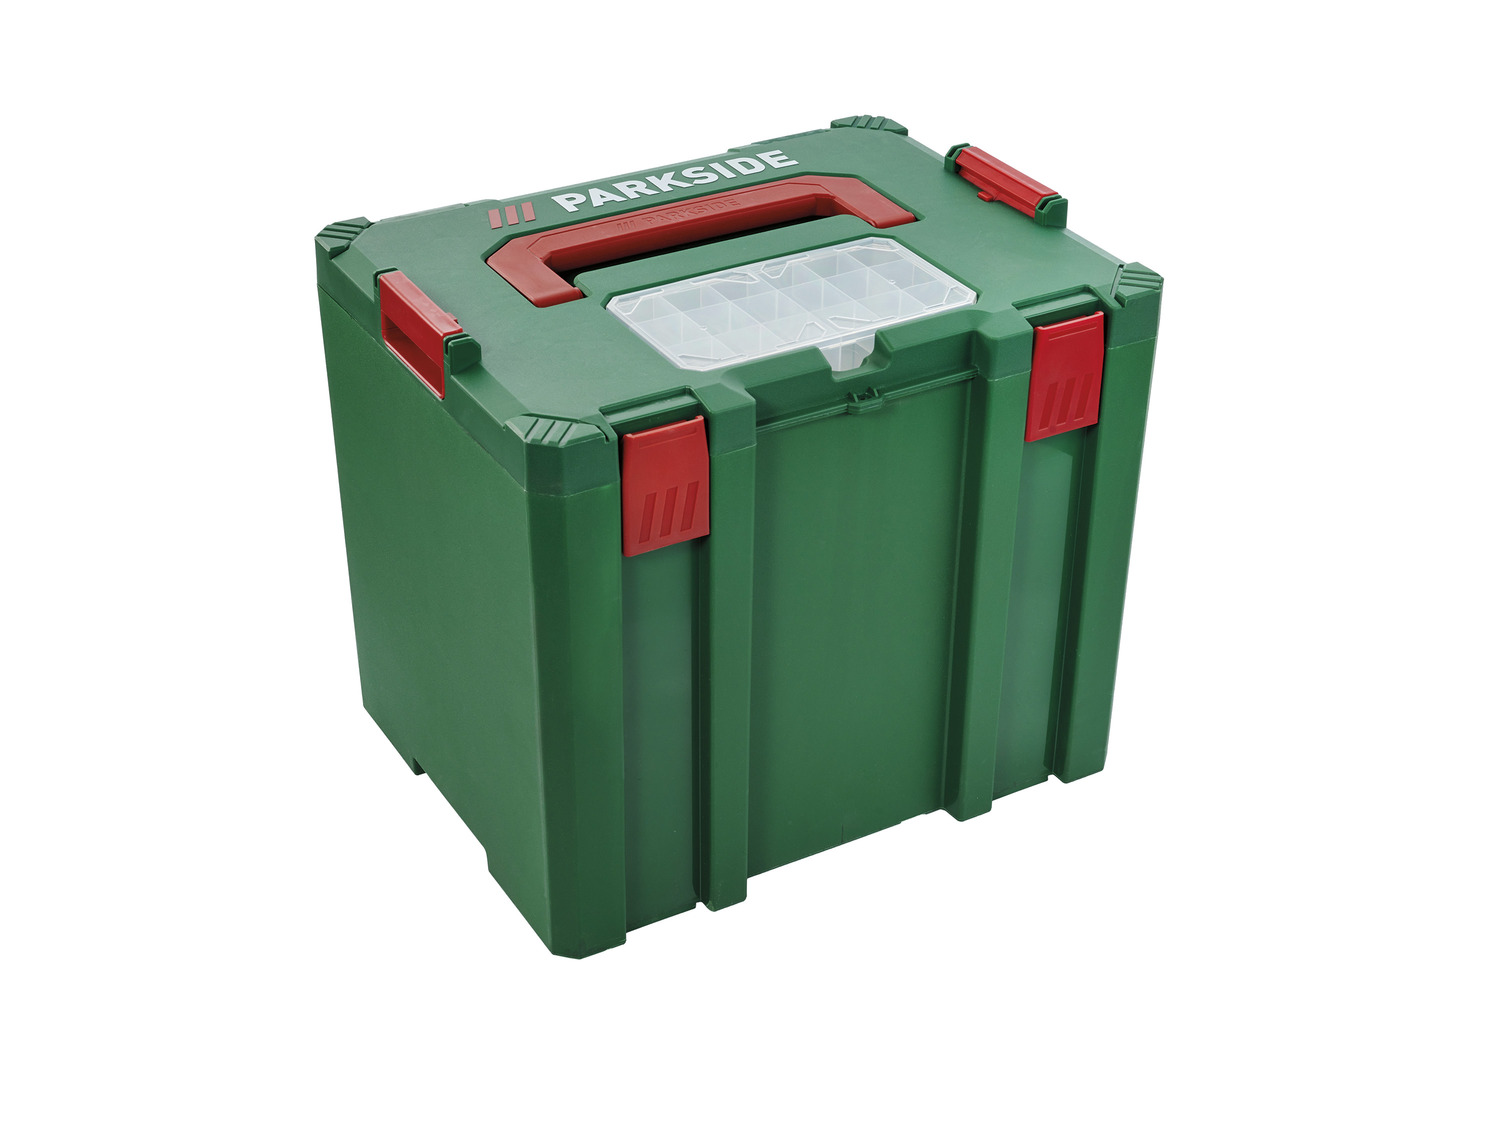 PARKSIDE® stapelbar XL, kombinier- und Sortimentsbox